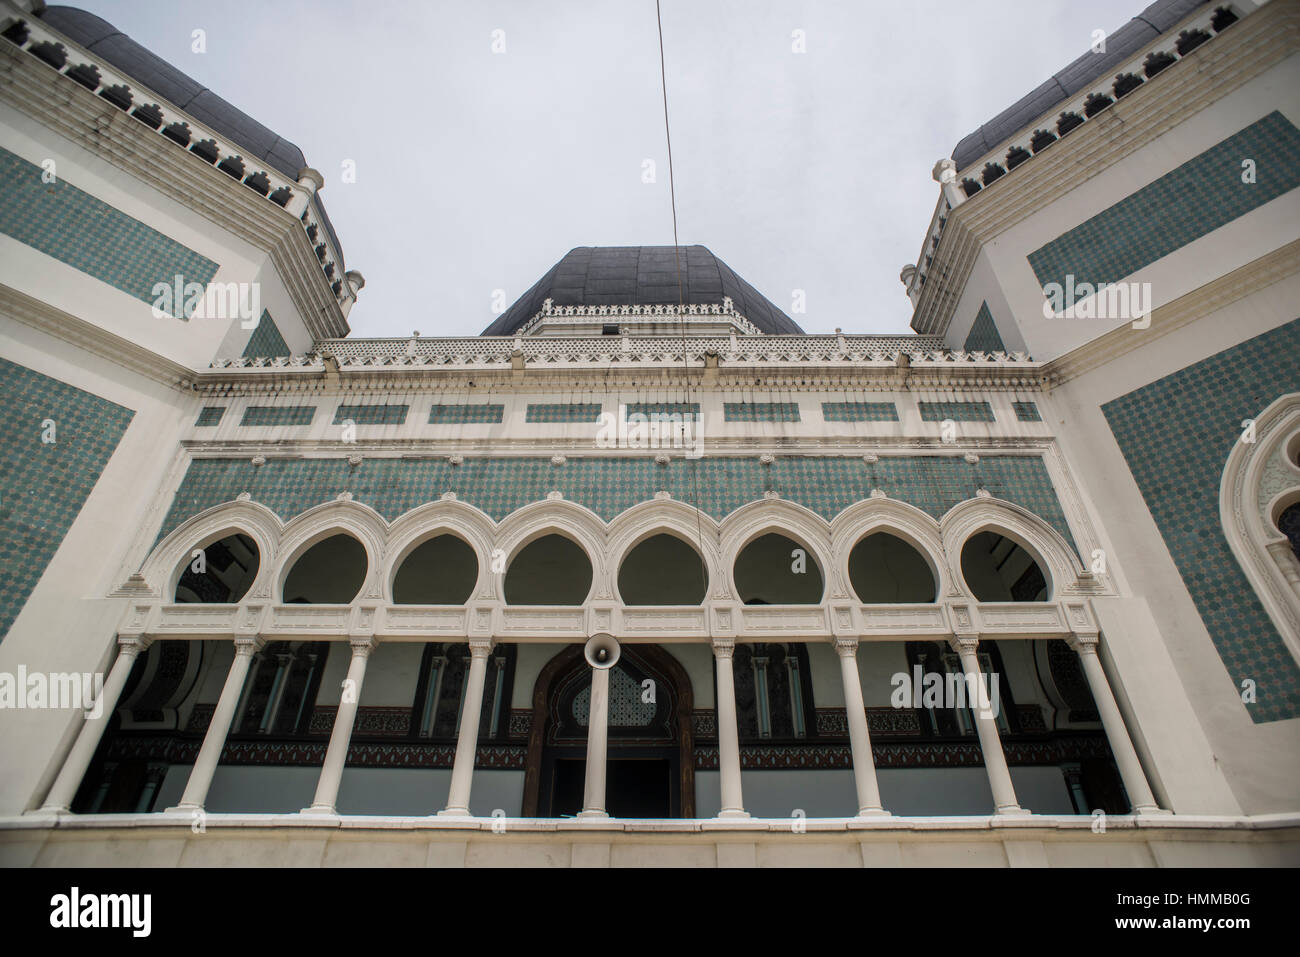 The Grand Mosque in Medan, Sumatra, Indonesia. Stock Photo